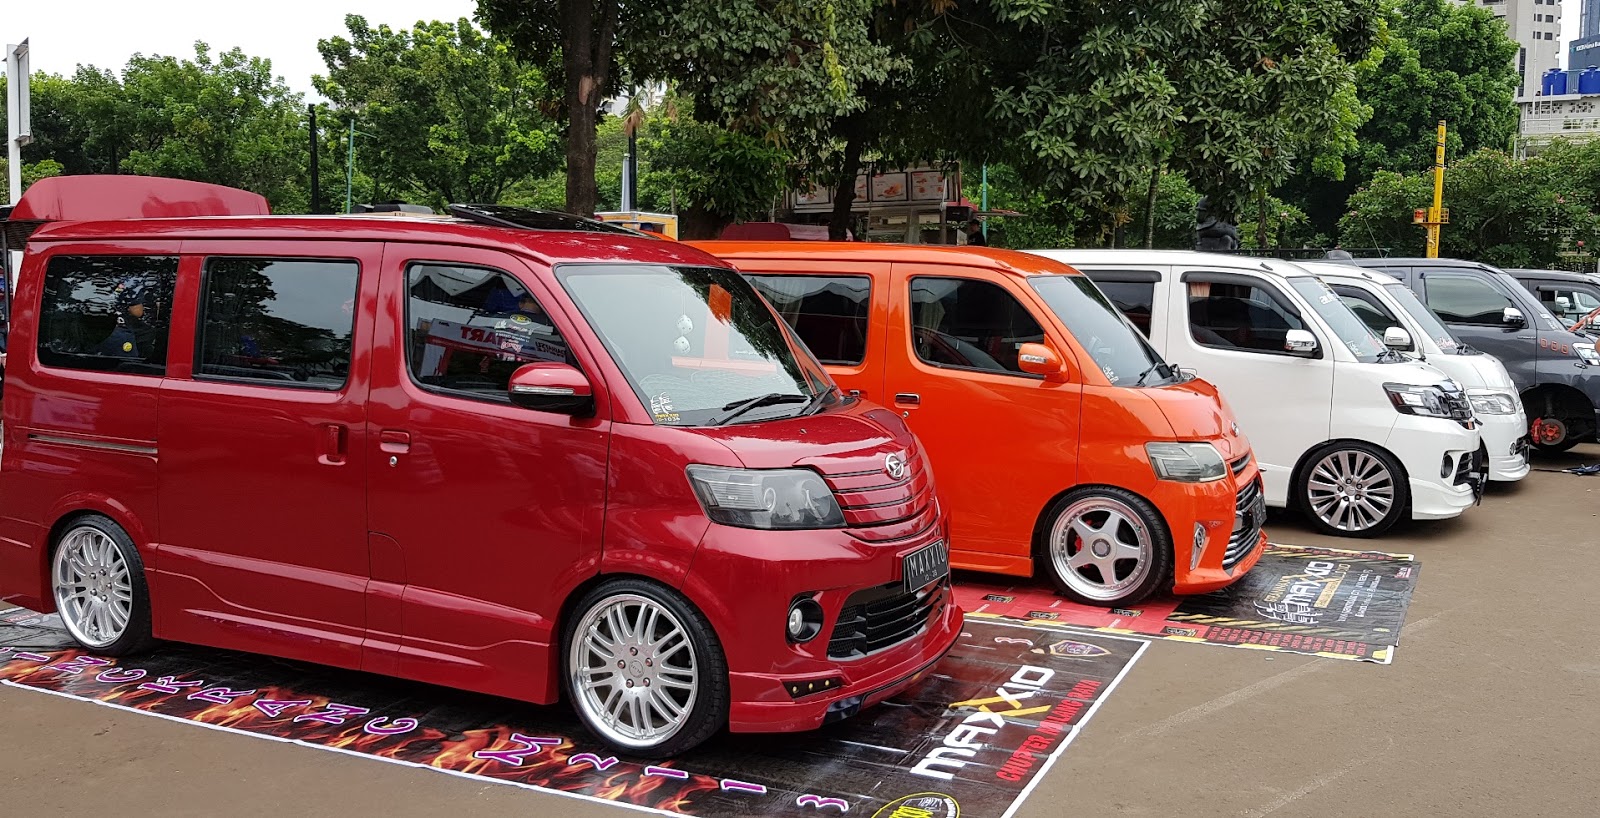 Ratusan Peserta Modifikasi Daihatsu Unjuk Gigi Di Jakarta